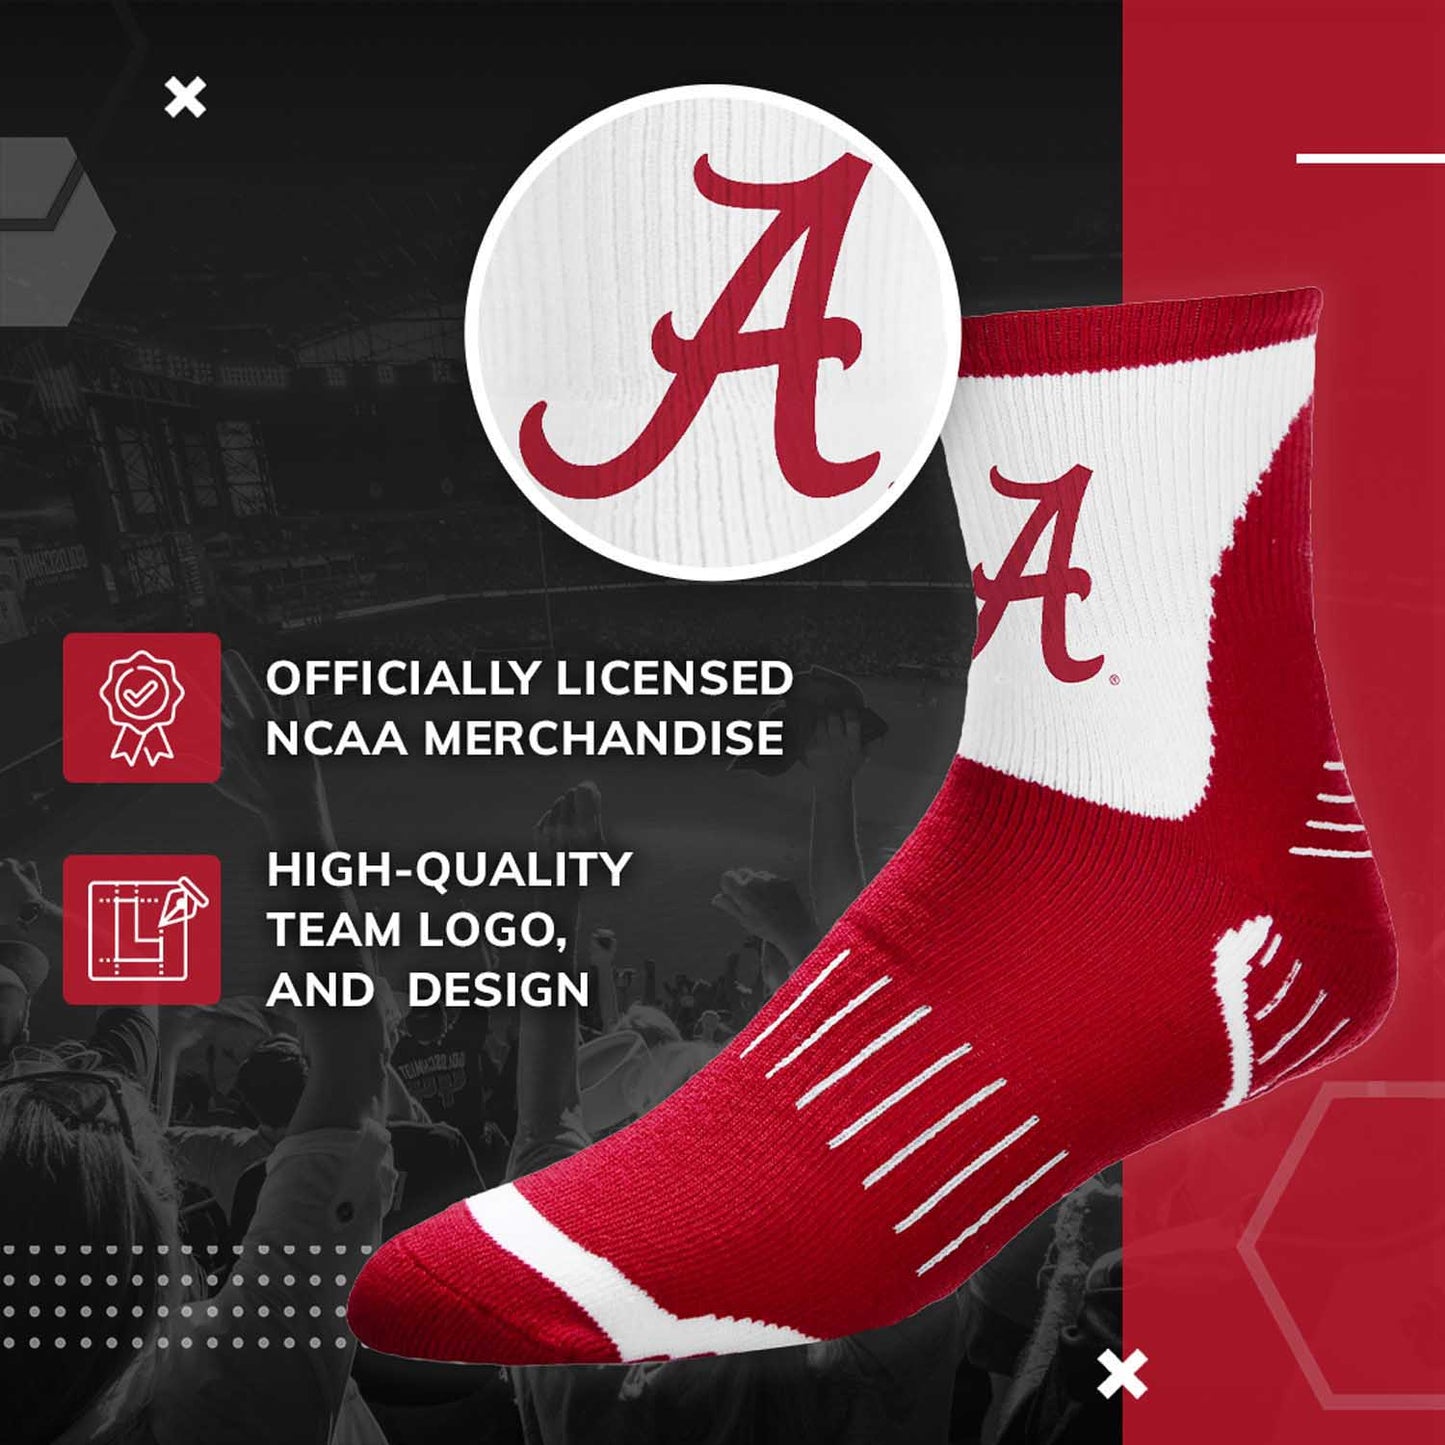 Alabama Crimson Tide Adult NCAA Surge Quarter Length Crew Socks - Crimson